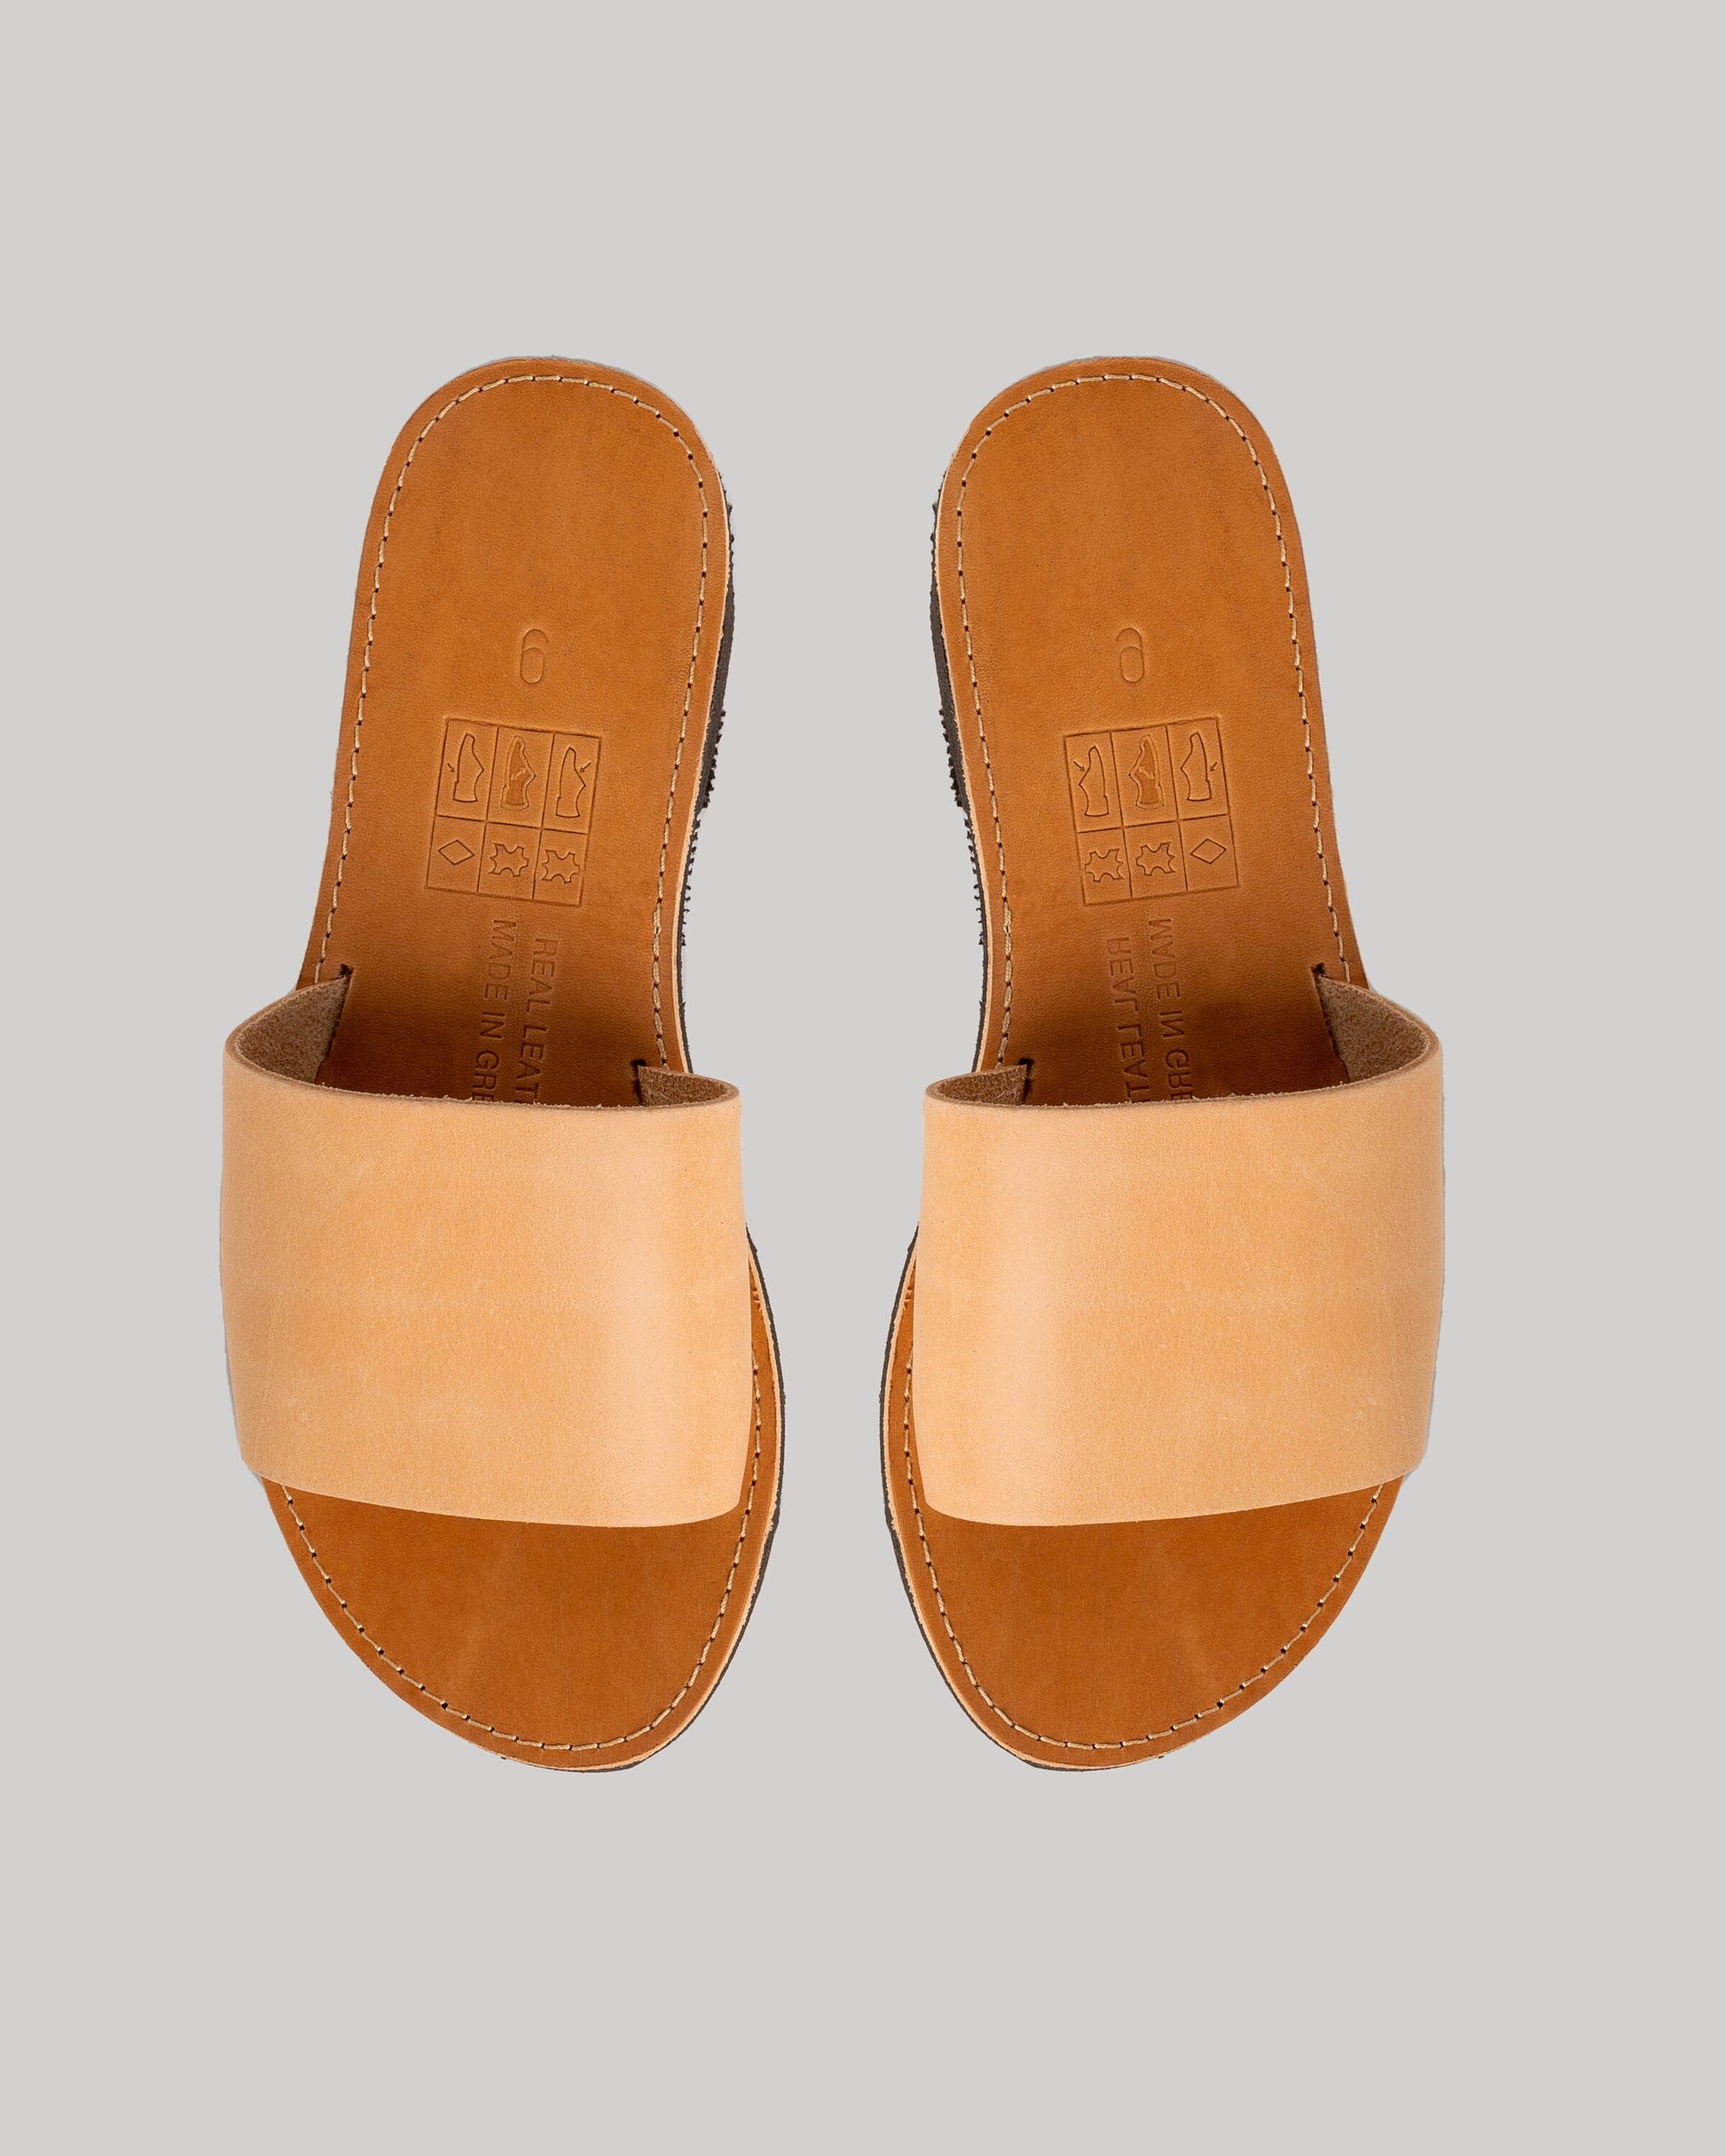 Minimalist natural leather sandals, Leather slippers women, Flat leather sandals, Womens leather slide sandals